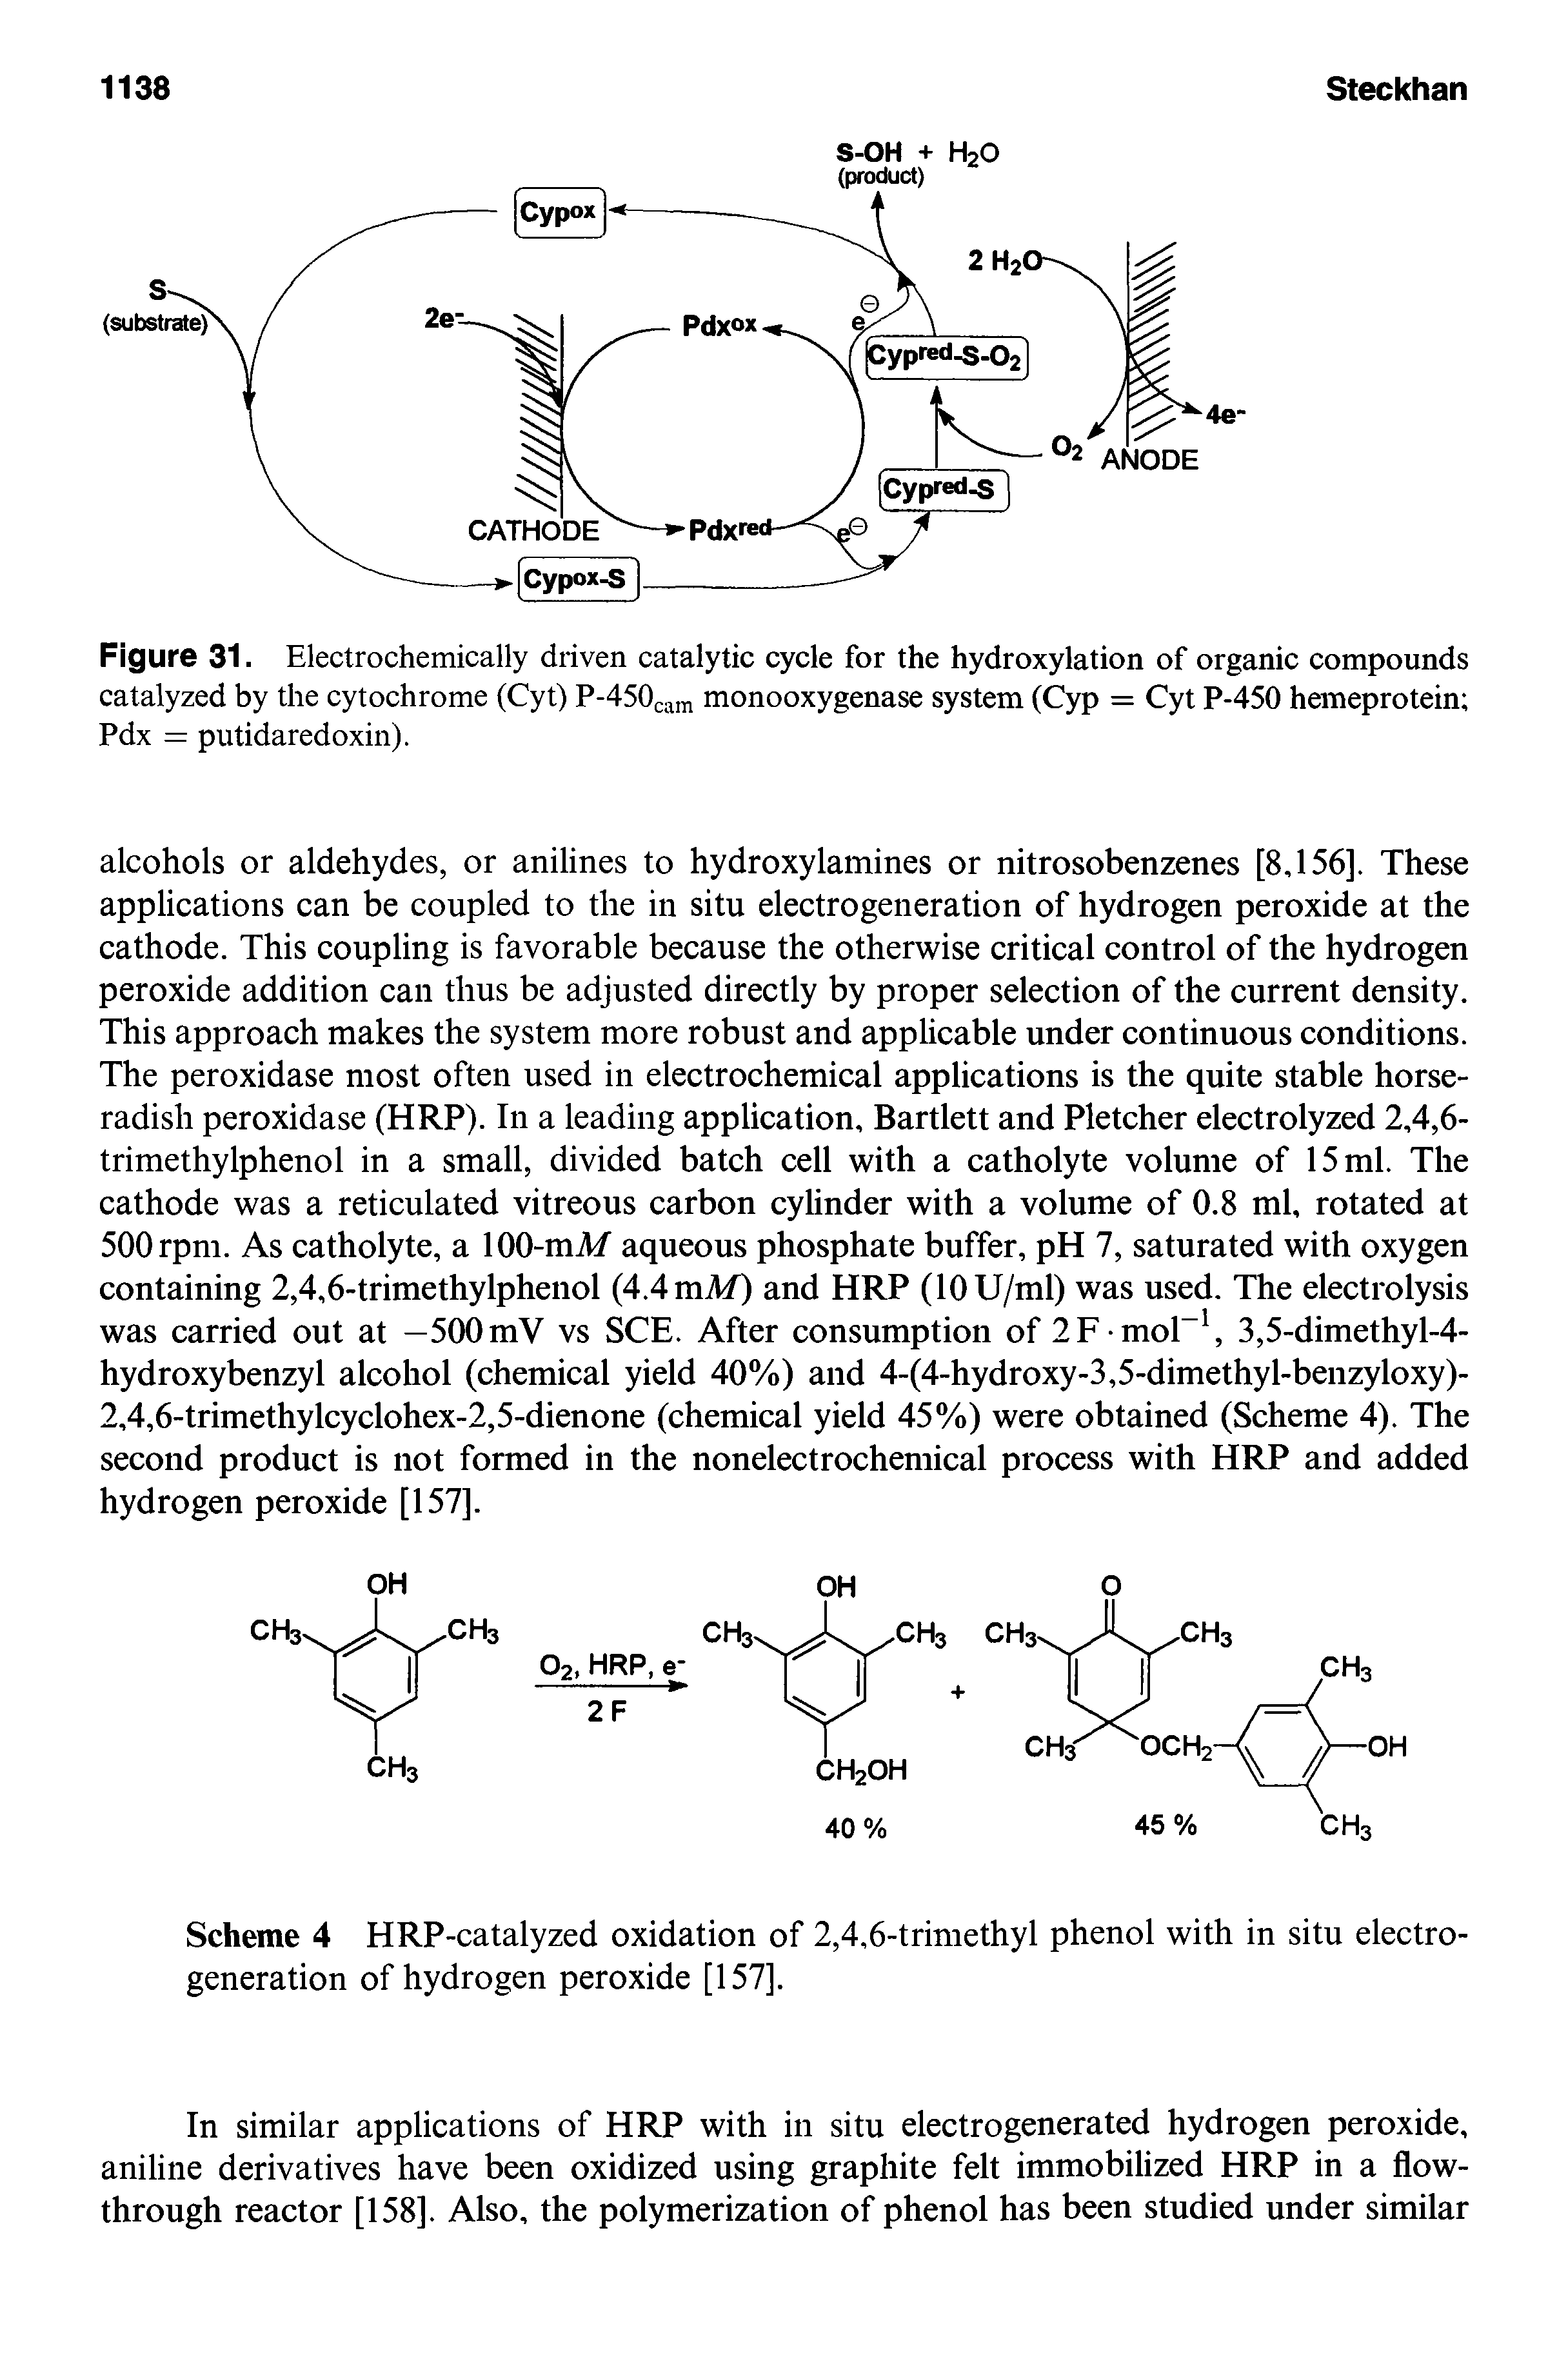 Scheme 4 HRP-catalyzed oxidation of 2,4,6-trimethyl phenol with in situ electrogeneration of hydrogen peroxide [157].